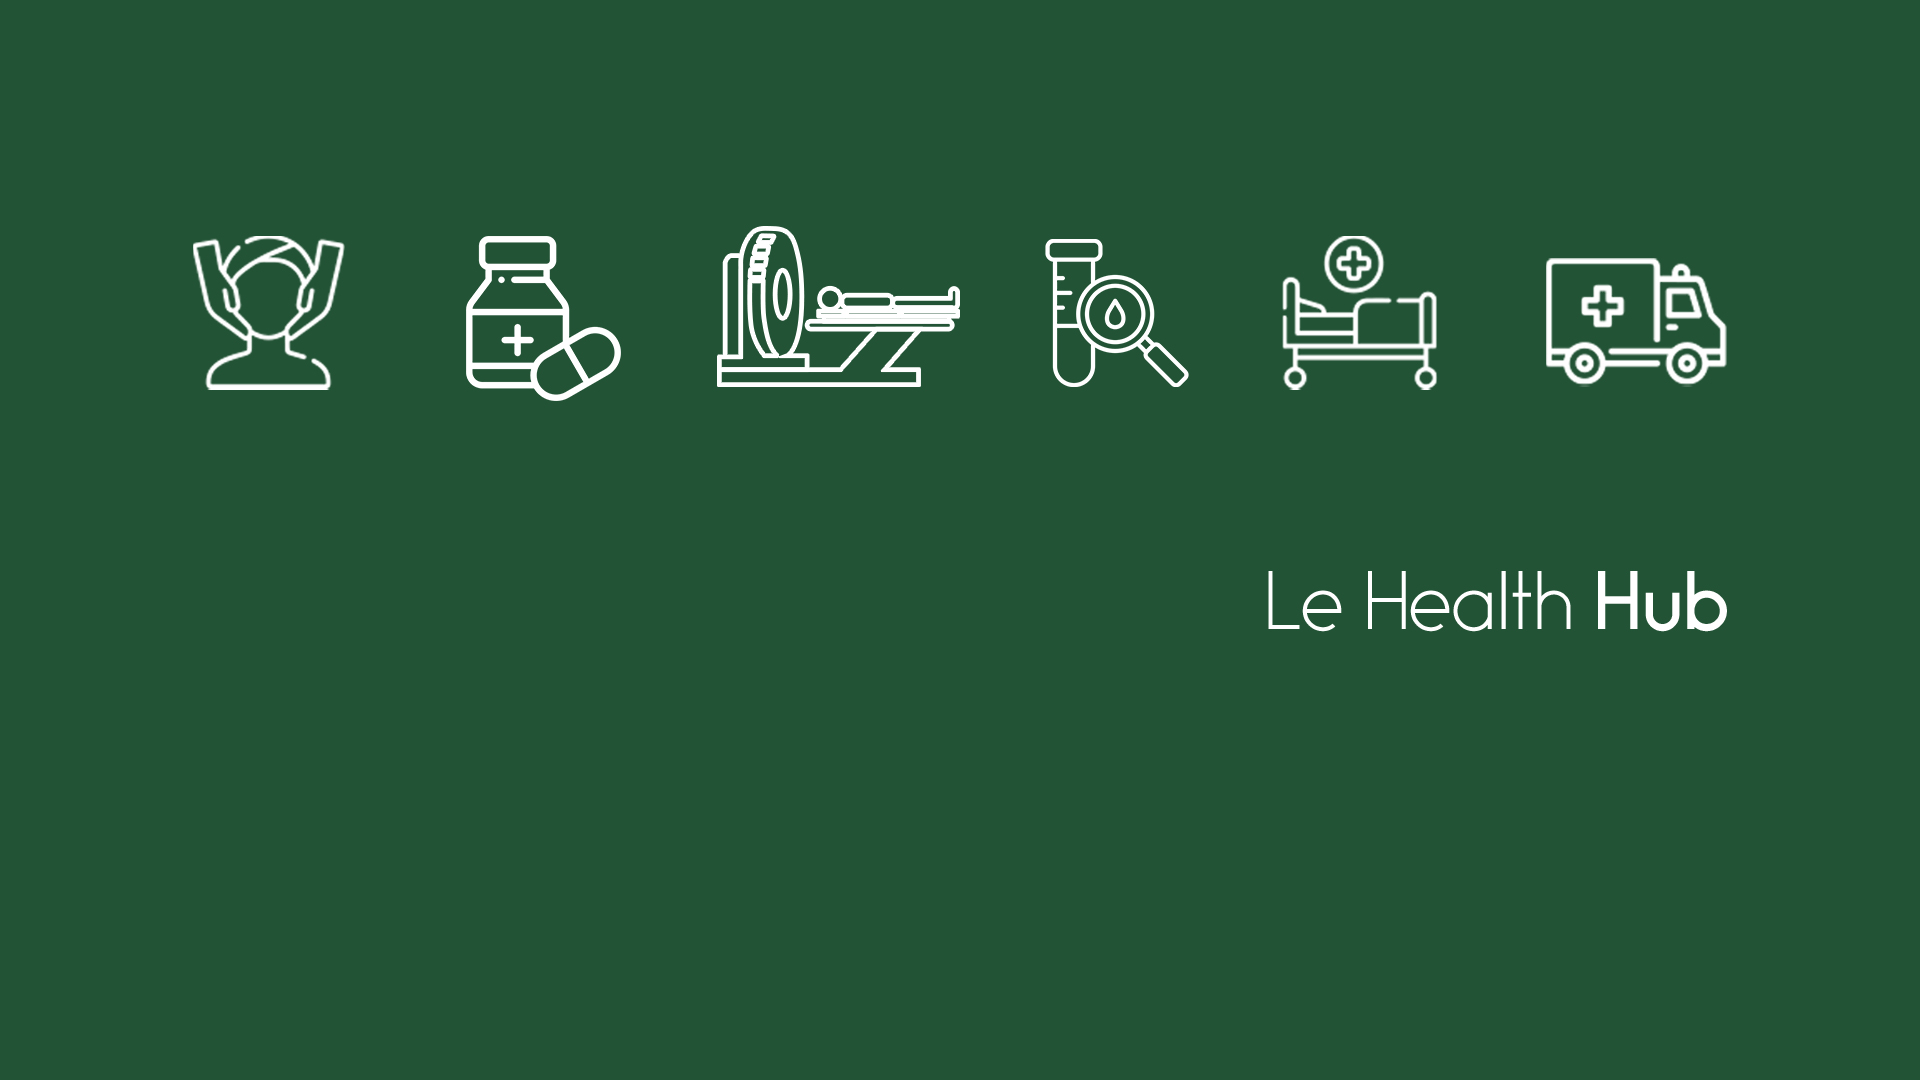 Le Health Hub icons by Diagnos Clinique